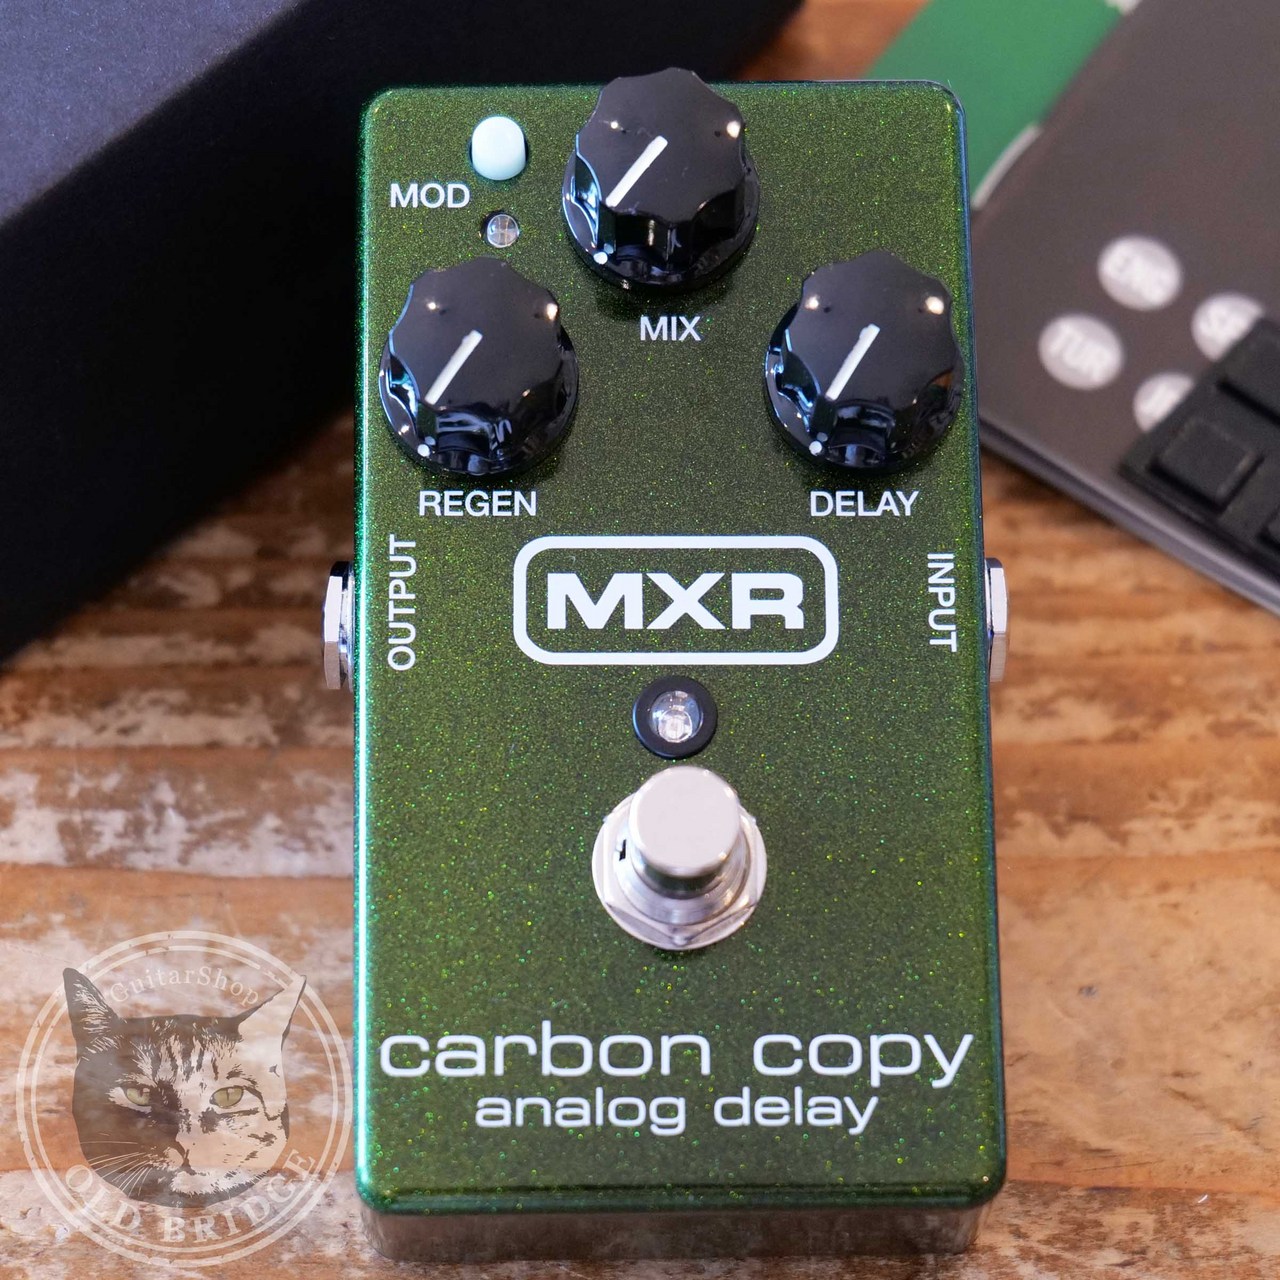 MXR M169 Carbon Copy Analog Delay 【ジャンク】